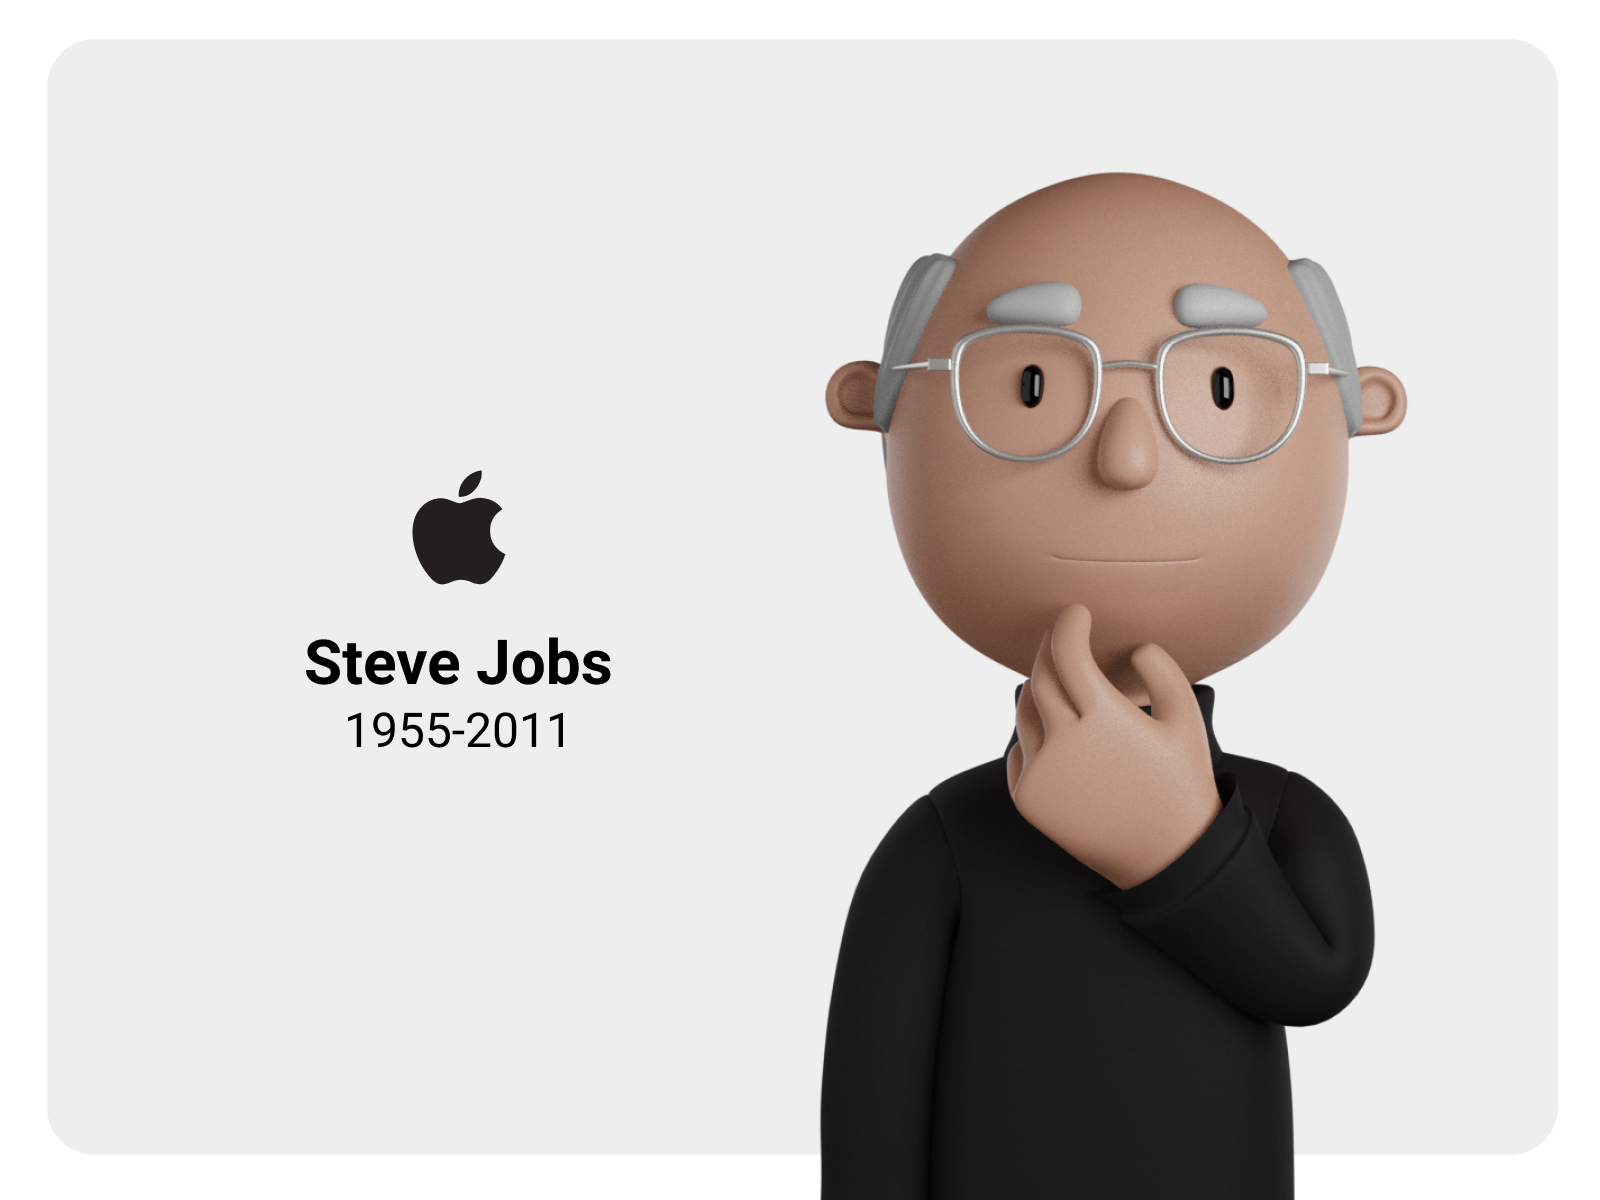 Meet Steve Jobko, the Anime-style Feminization of Steve Jobs | Product News  | Tokyo Otaku Mode (TOM) Shop: Figures & Merch From Japan